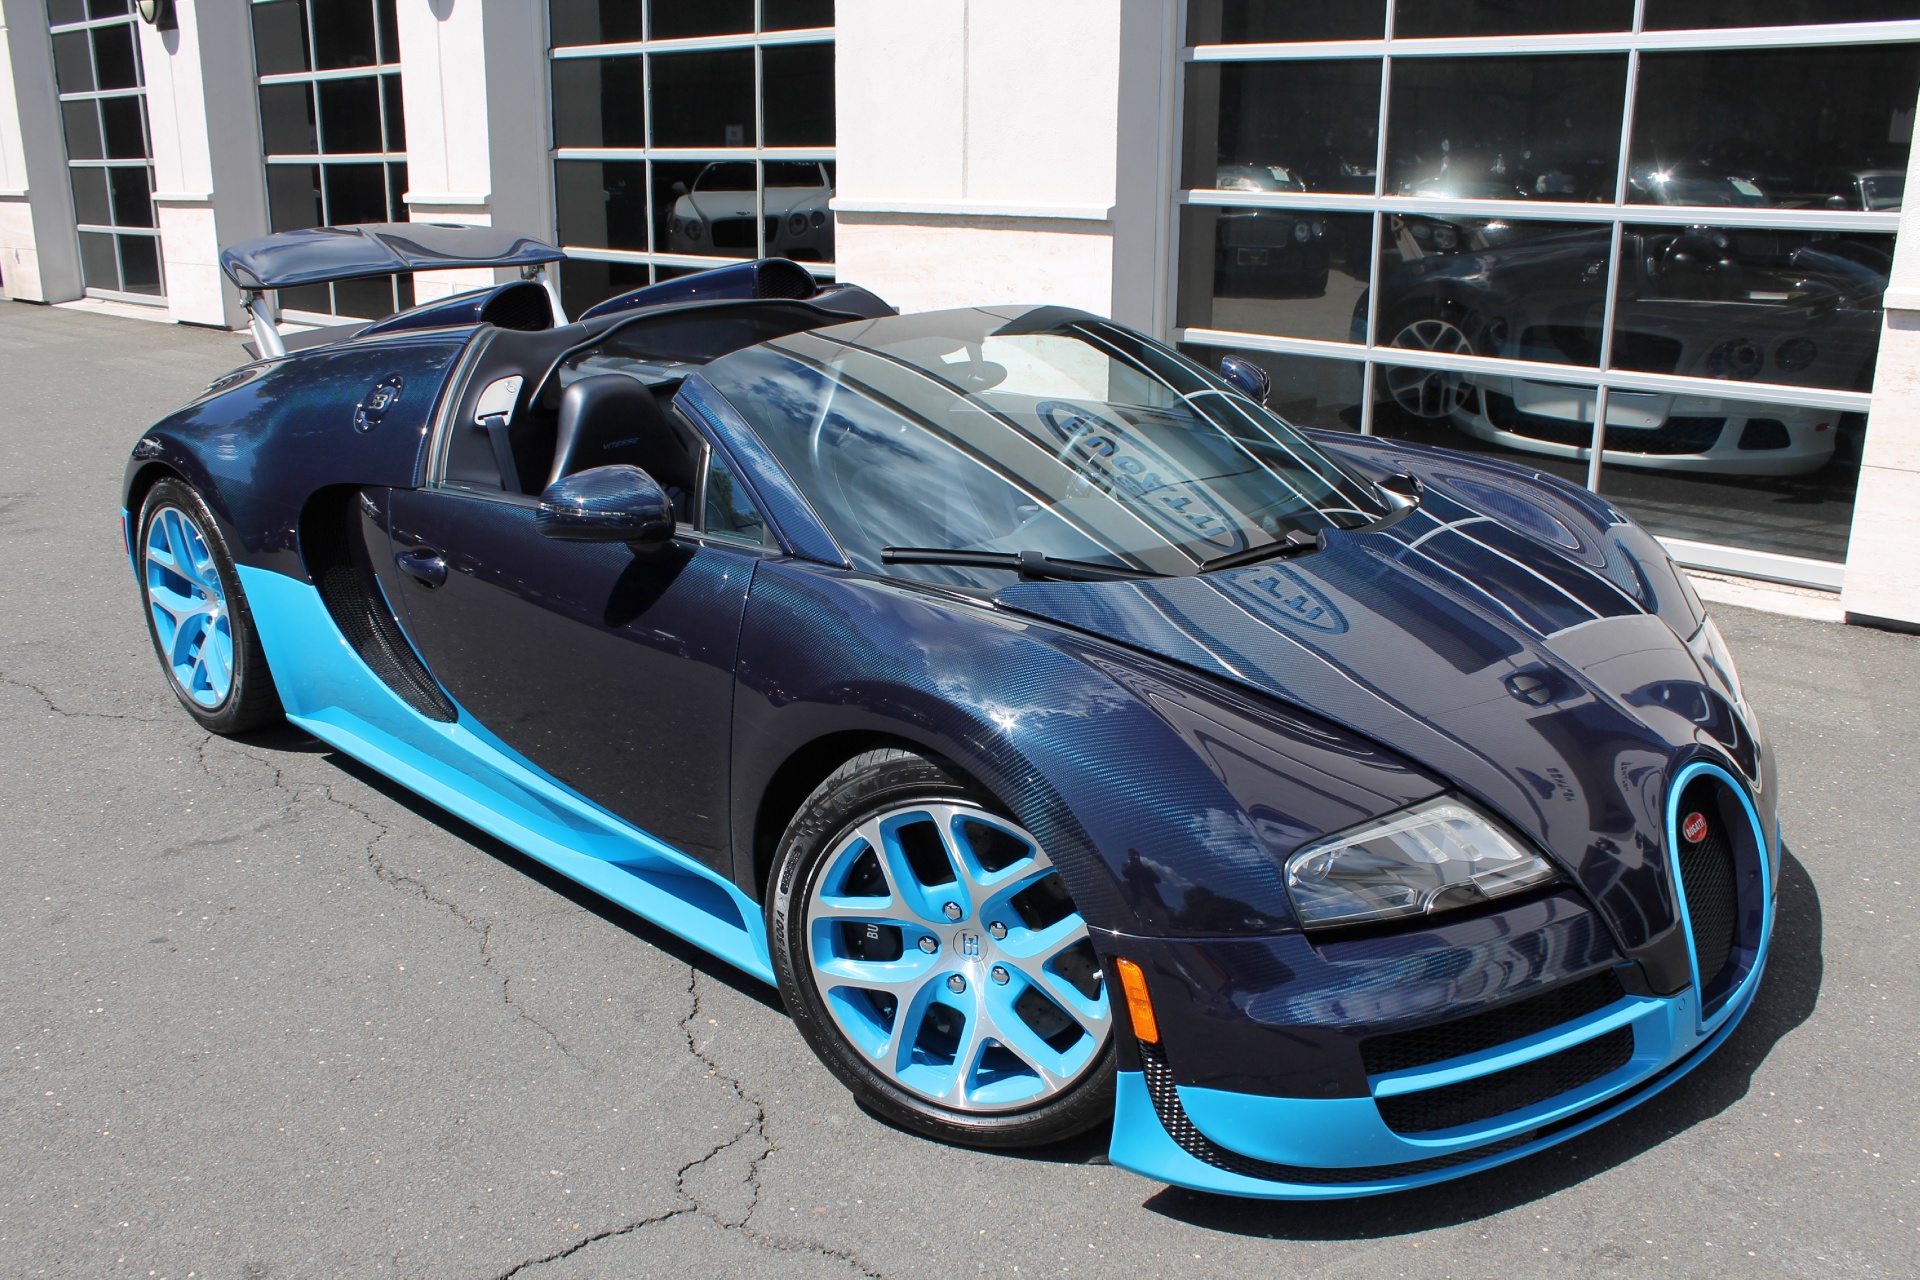 Two Bugatti Veyron Grand Sport Vitesse S For Sale At U S Dealer Gtspirit